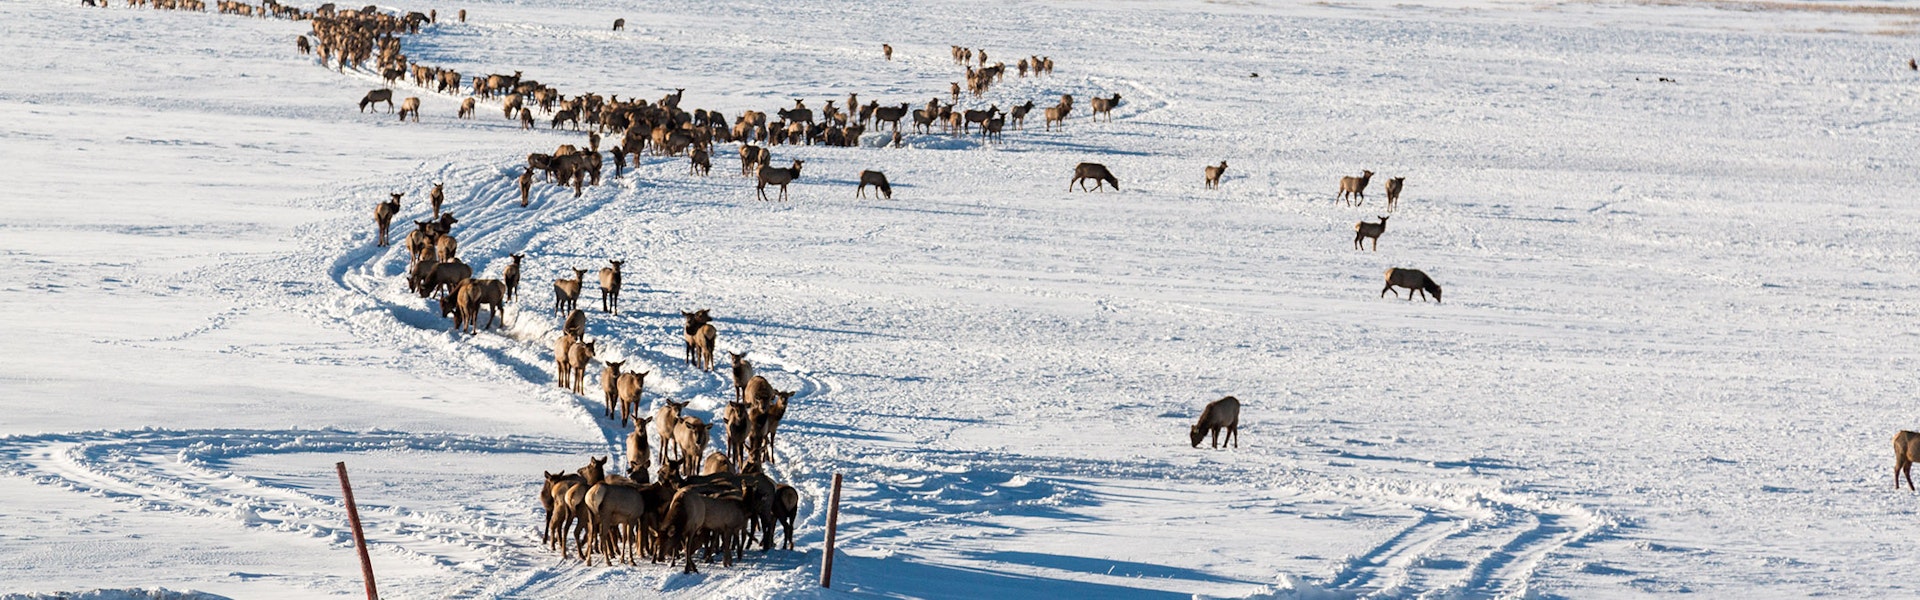 Large herd of elk surrounding a sleigh ride in winter